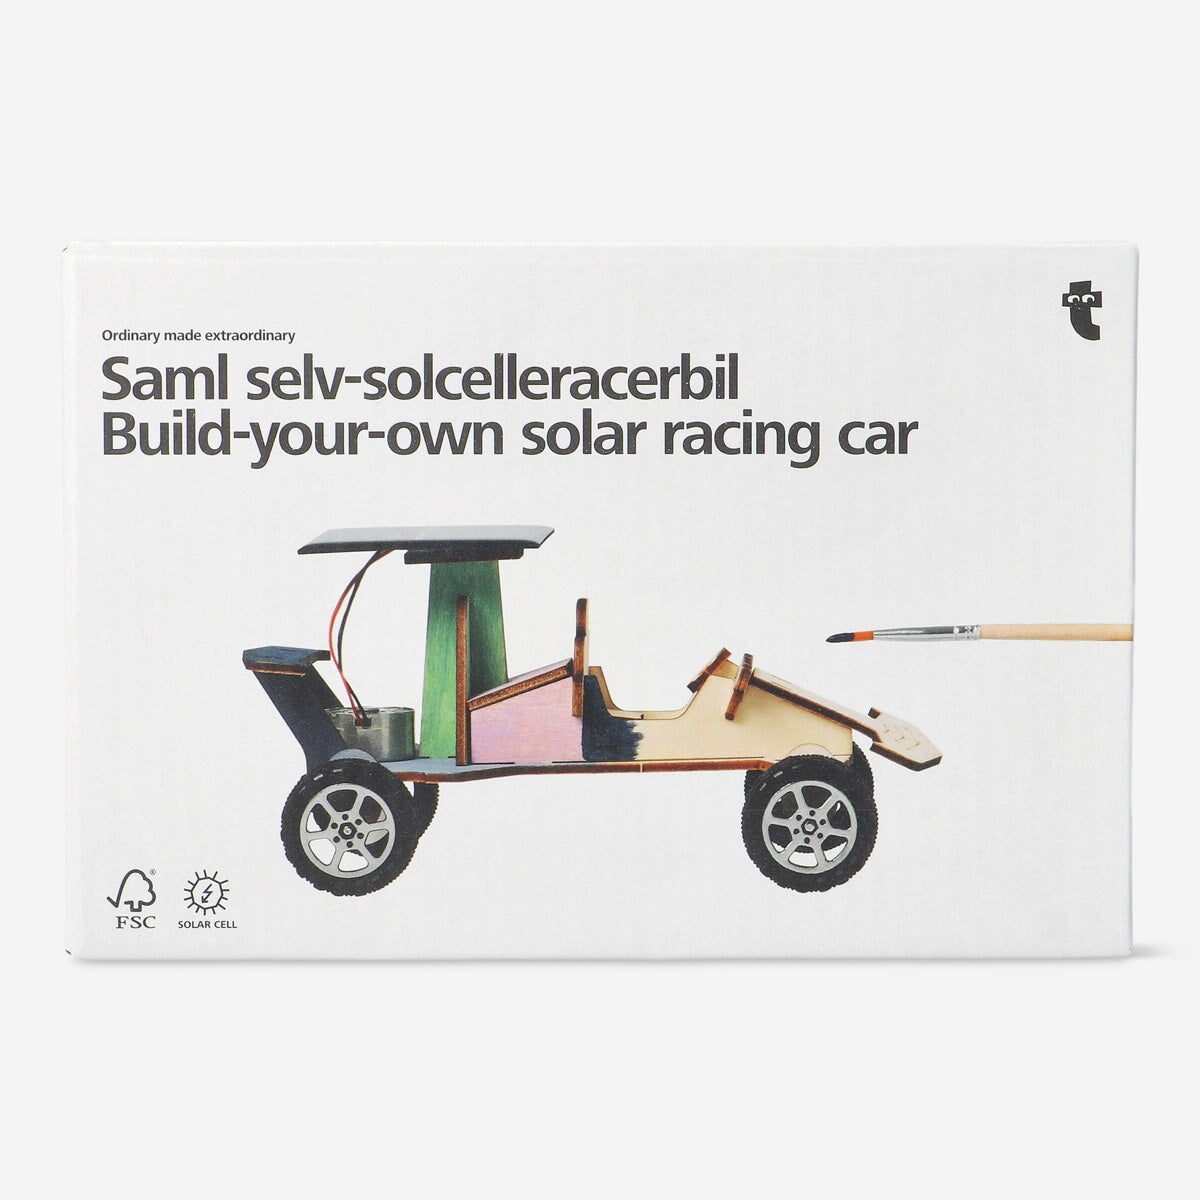 Build-your-own solar racing car Gadget Flying Tiger Copenhagen 